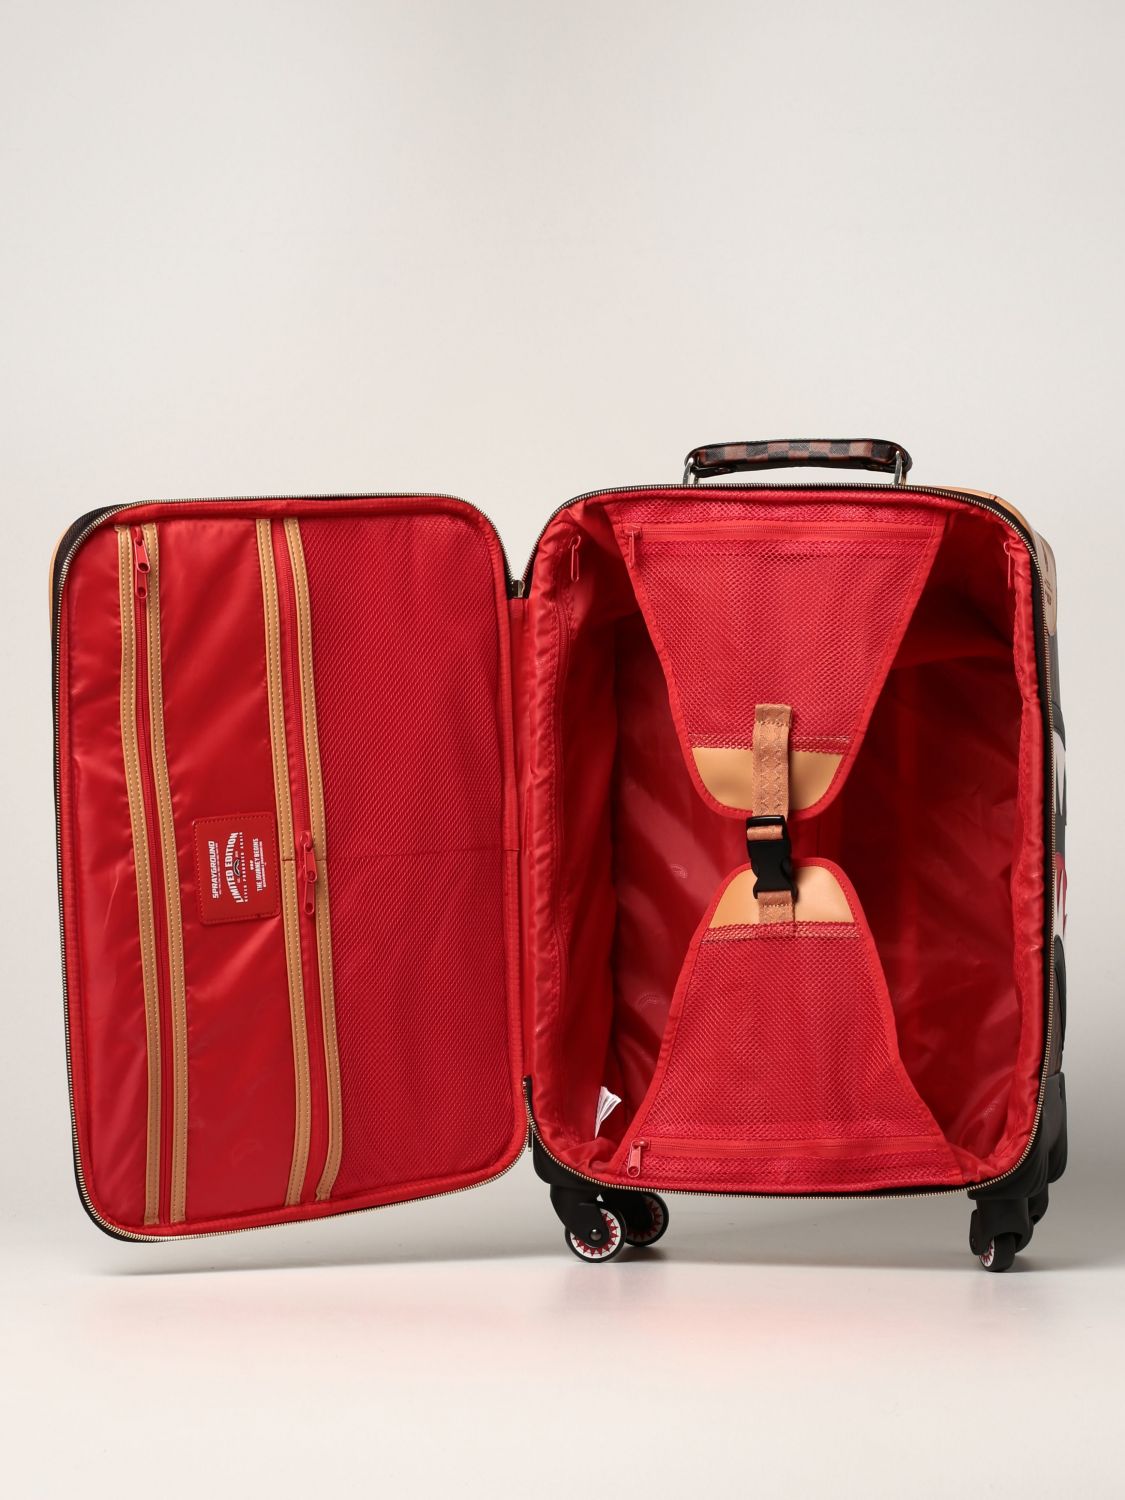 Travel bag Sprayground: Trolley Henny air to the throne soft luggage Sprayground brown 2